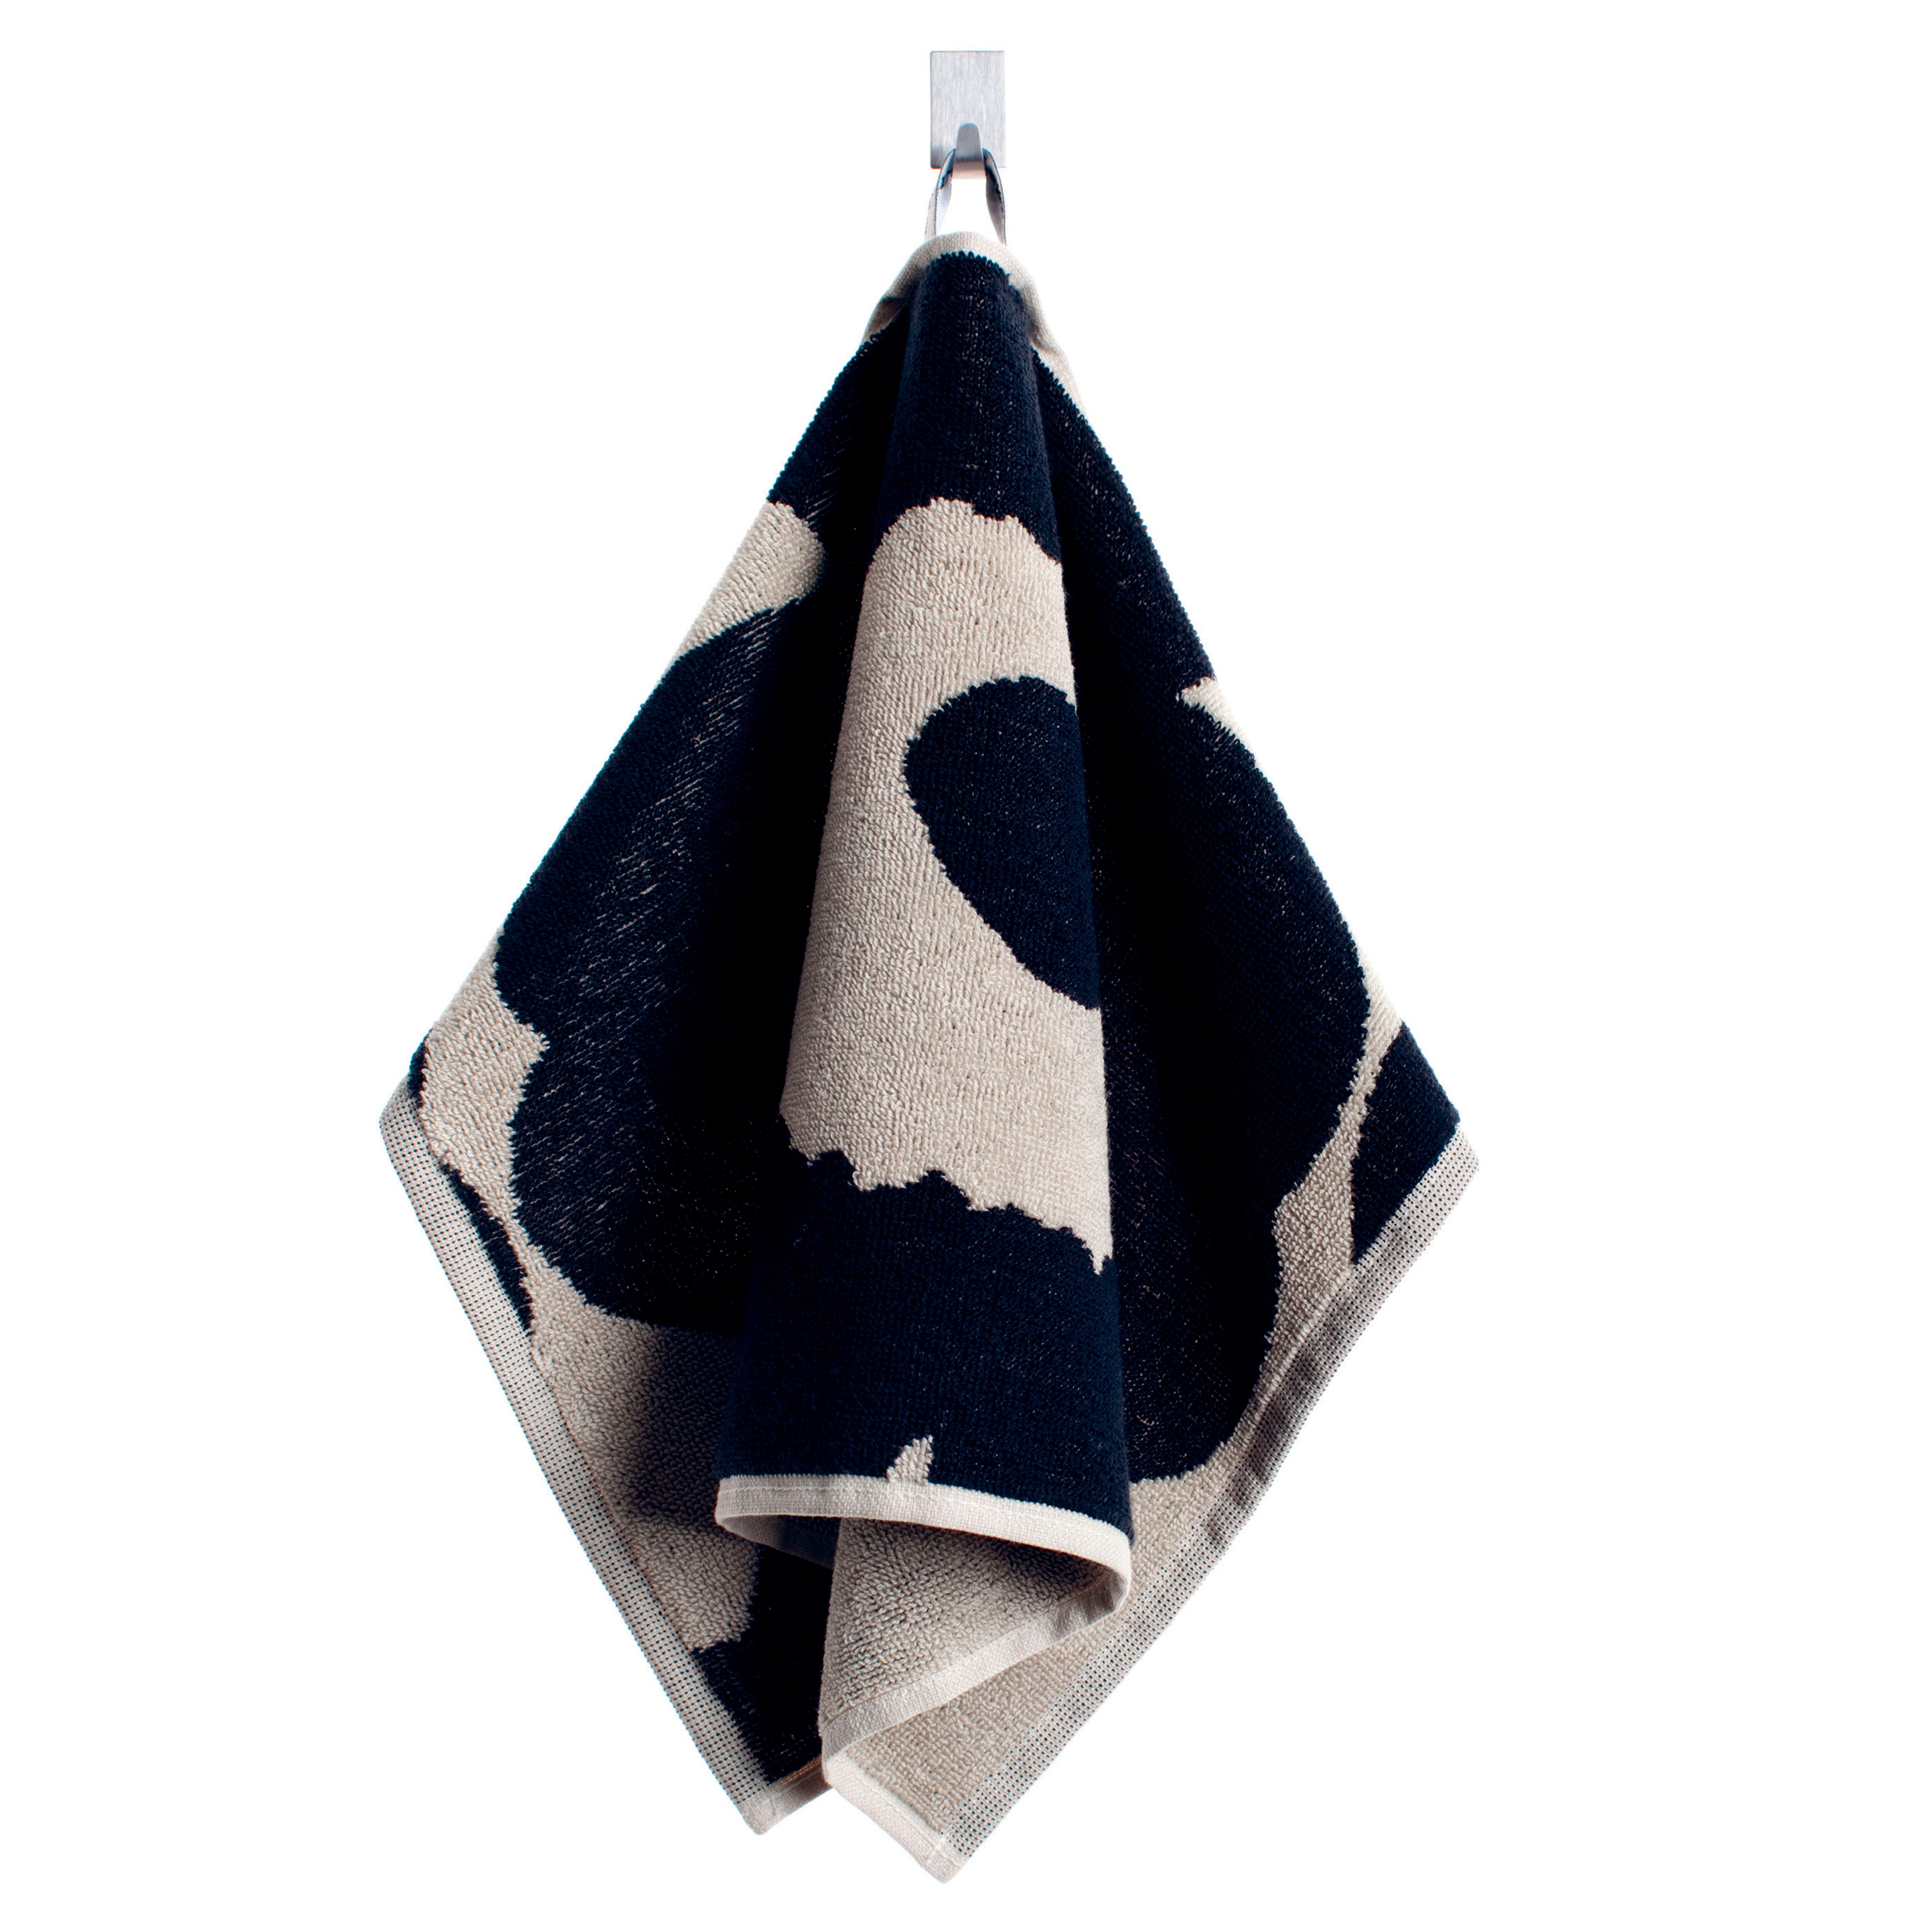 Unikko towel black-sand from Marimekko 